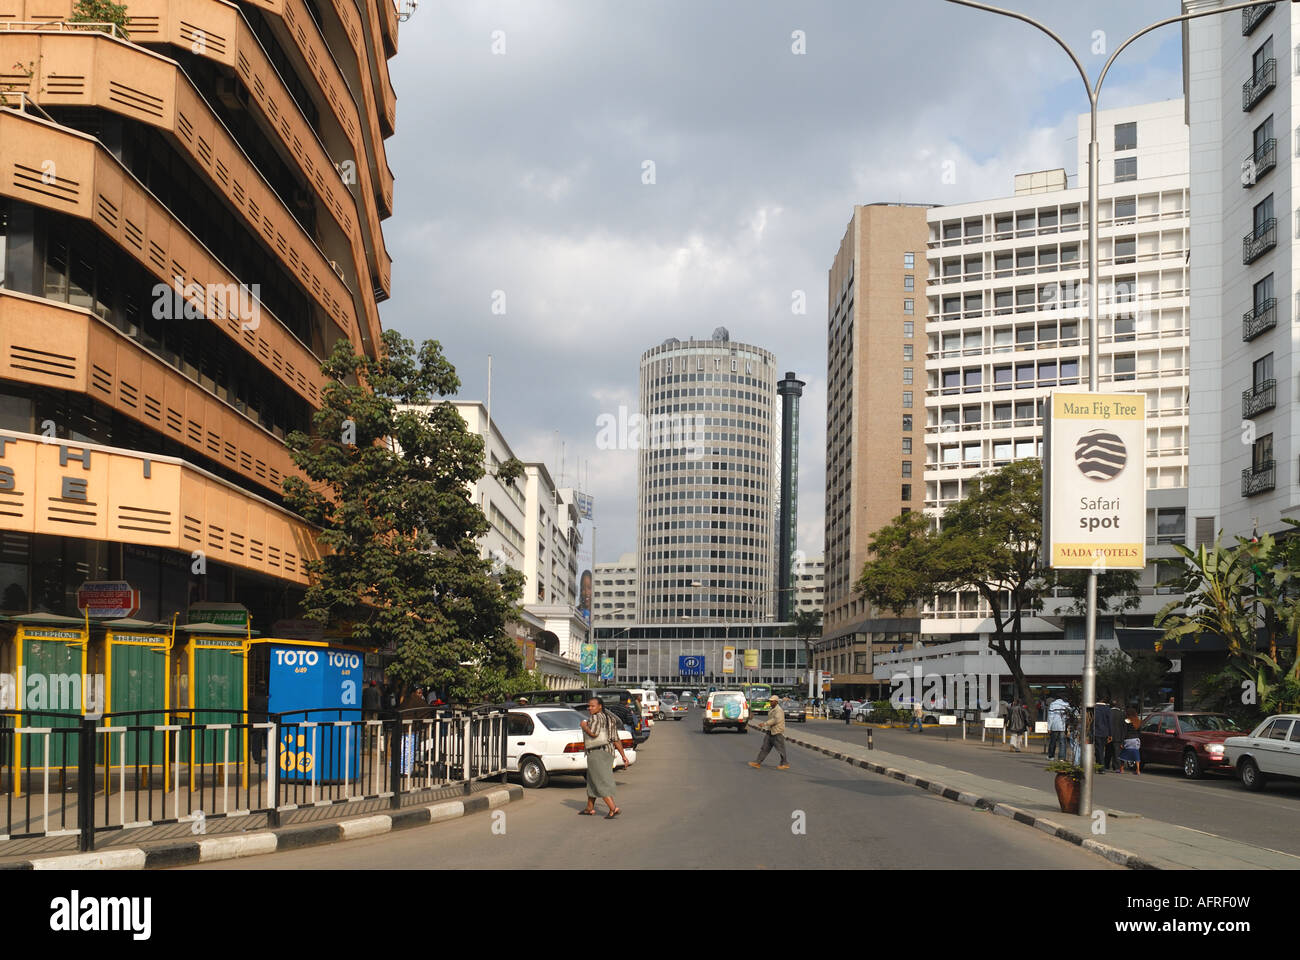 Kimathi Street Nairobi Kenya Africa orientale la Hilton International Hotel si trova alla fine della strada Foto Stock